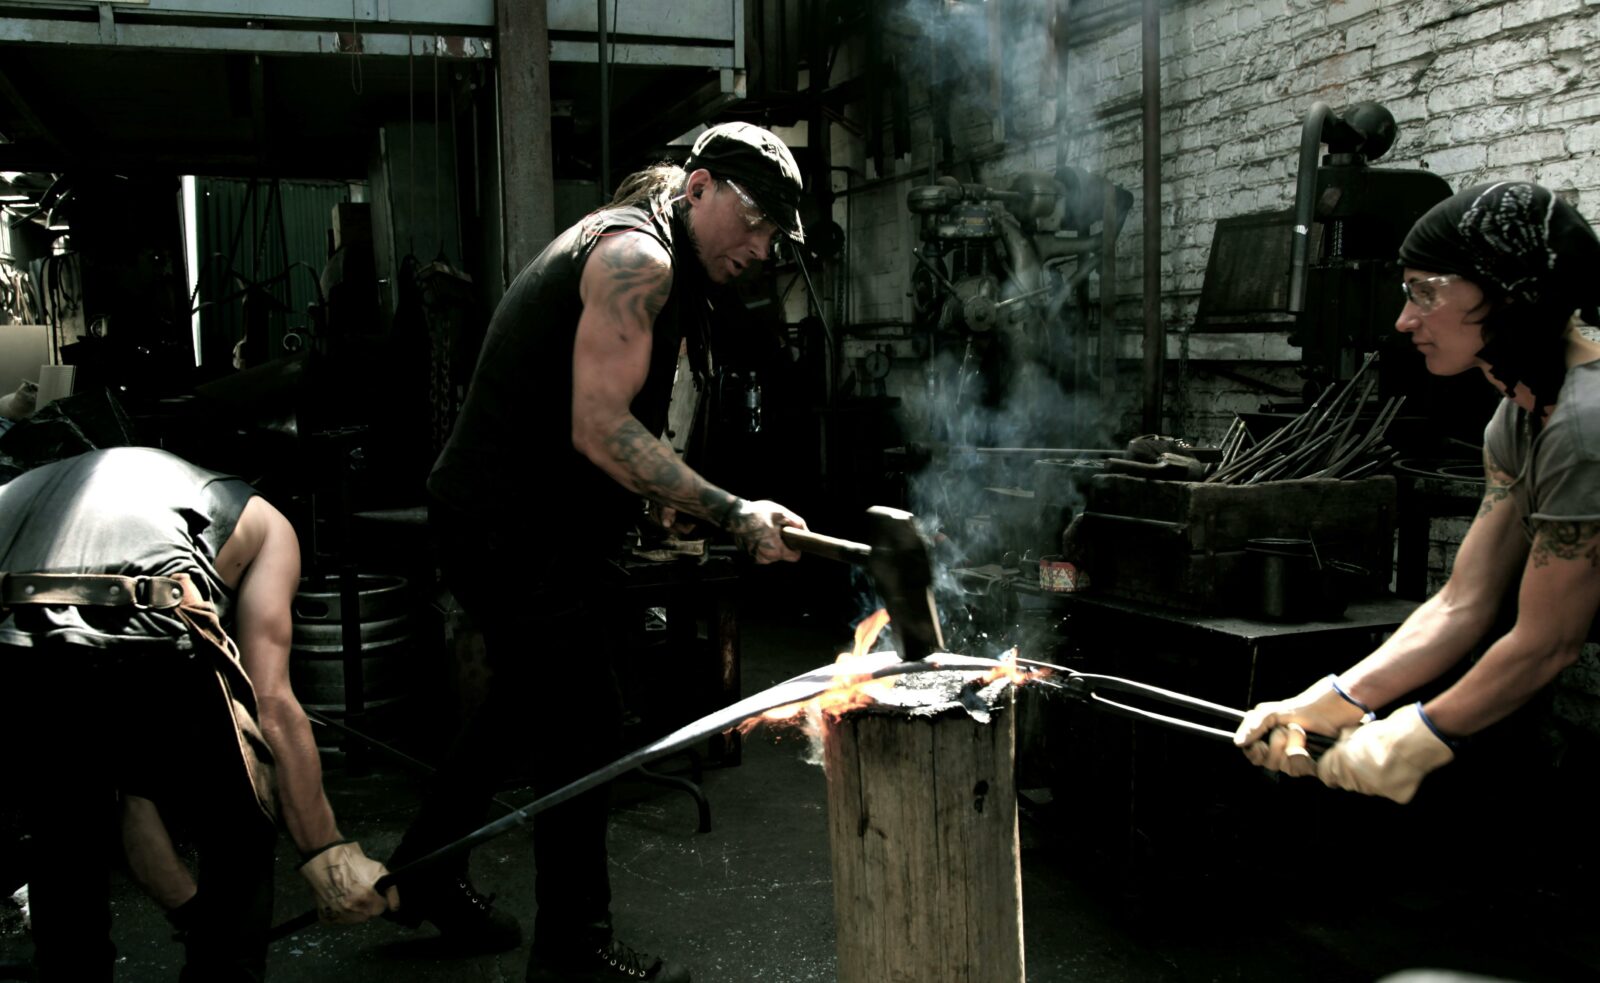 Artist blacksmith Pete Mattila at work in the forge.